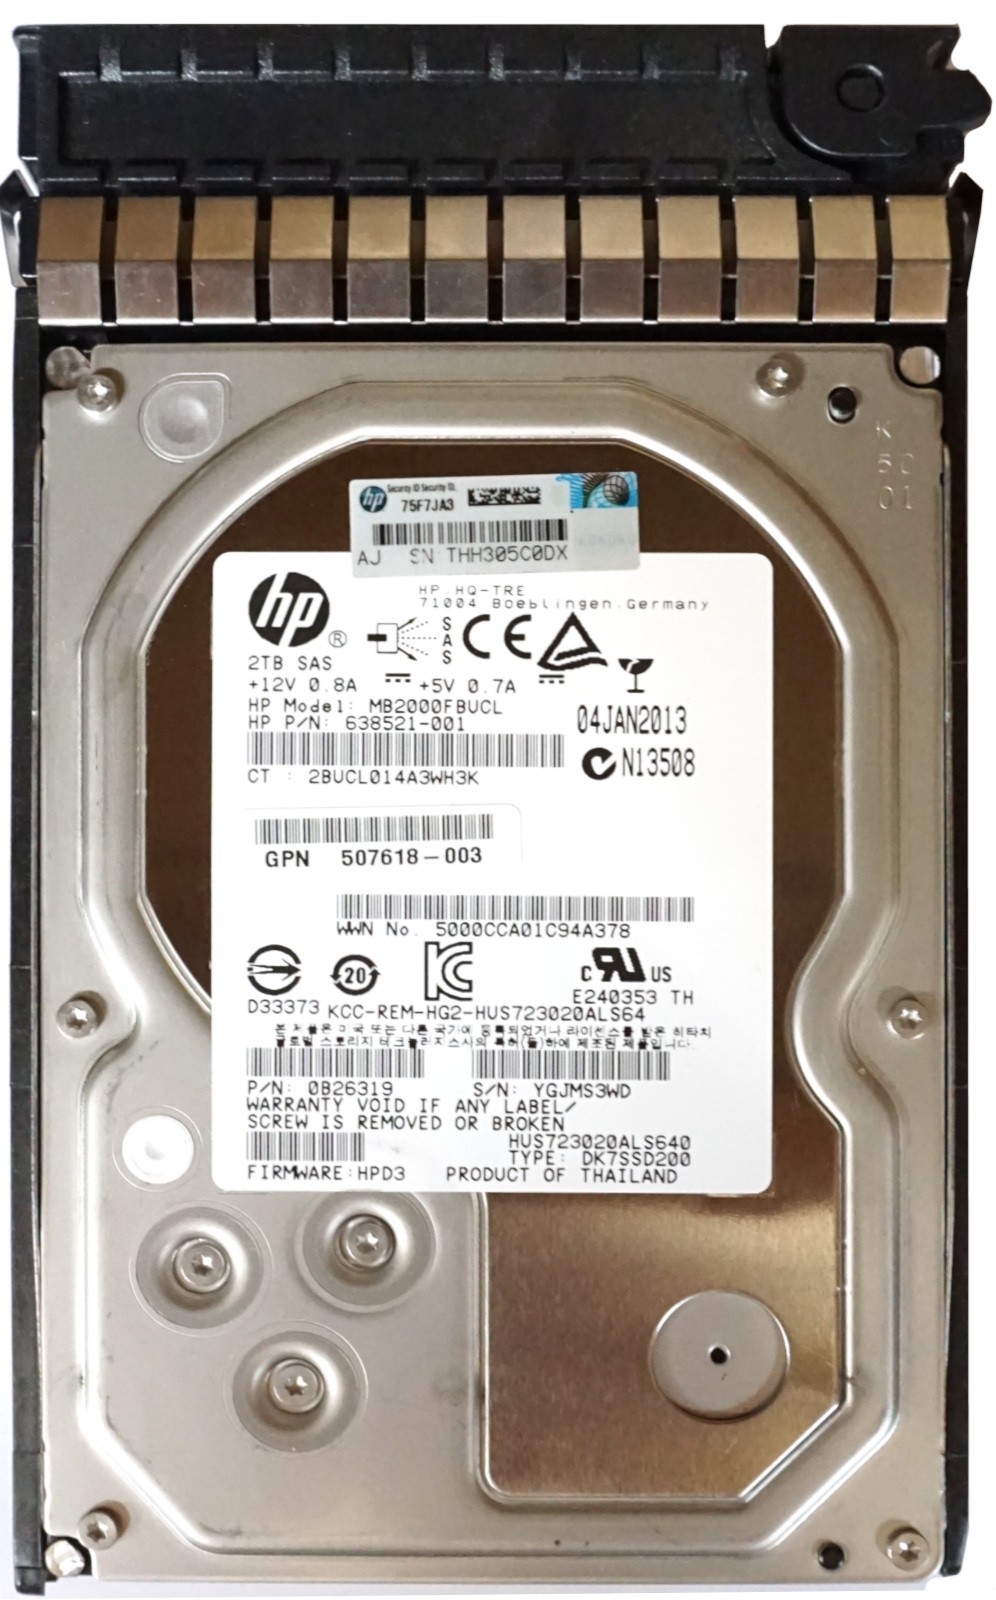 HP (638521-001) 2TB SAS-2 (3.5") 6Gb/s 7.2K HDD in Gen5 Hot-Swap Caddy